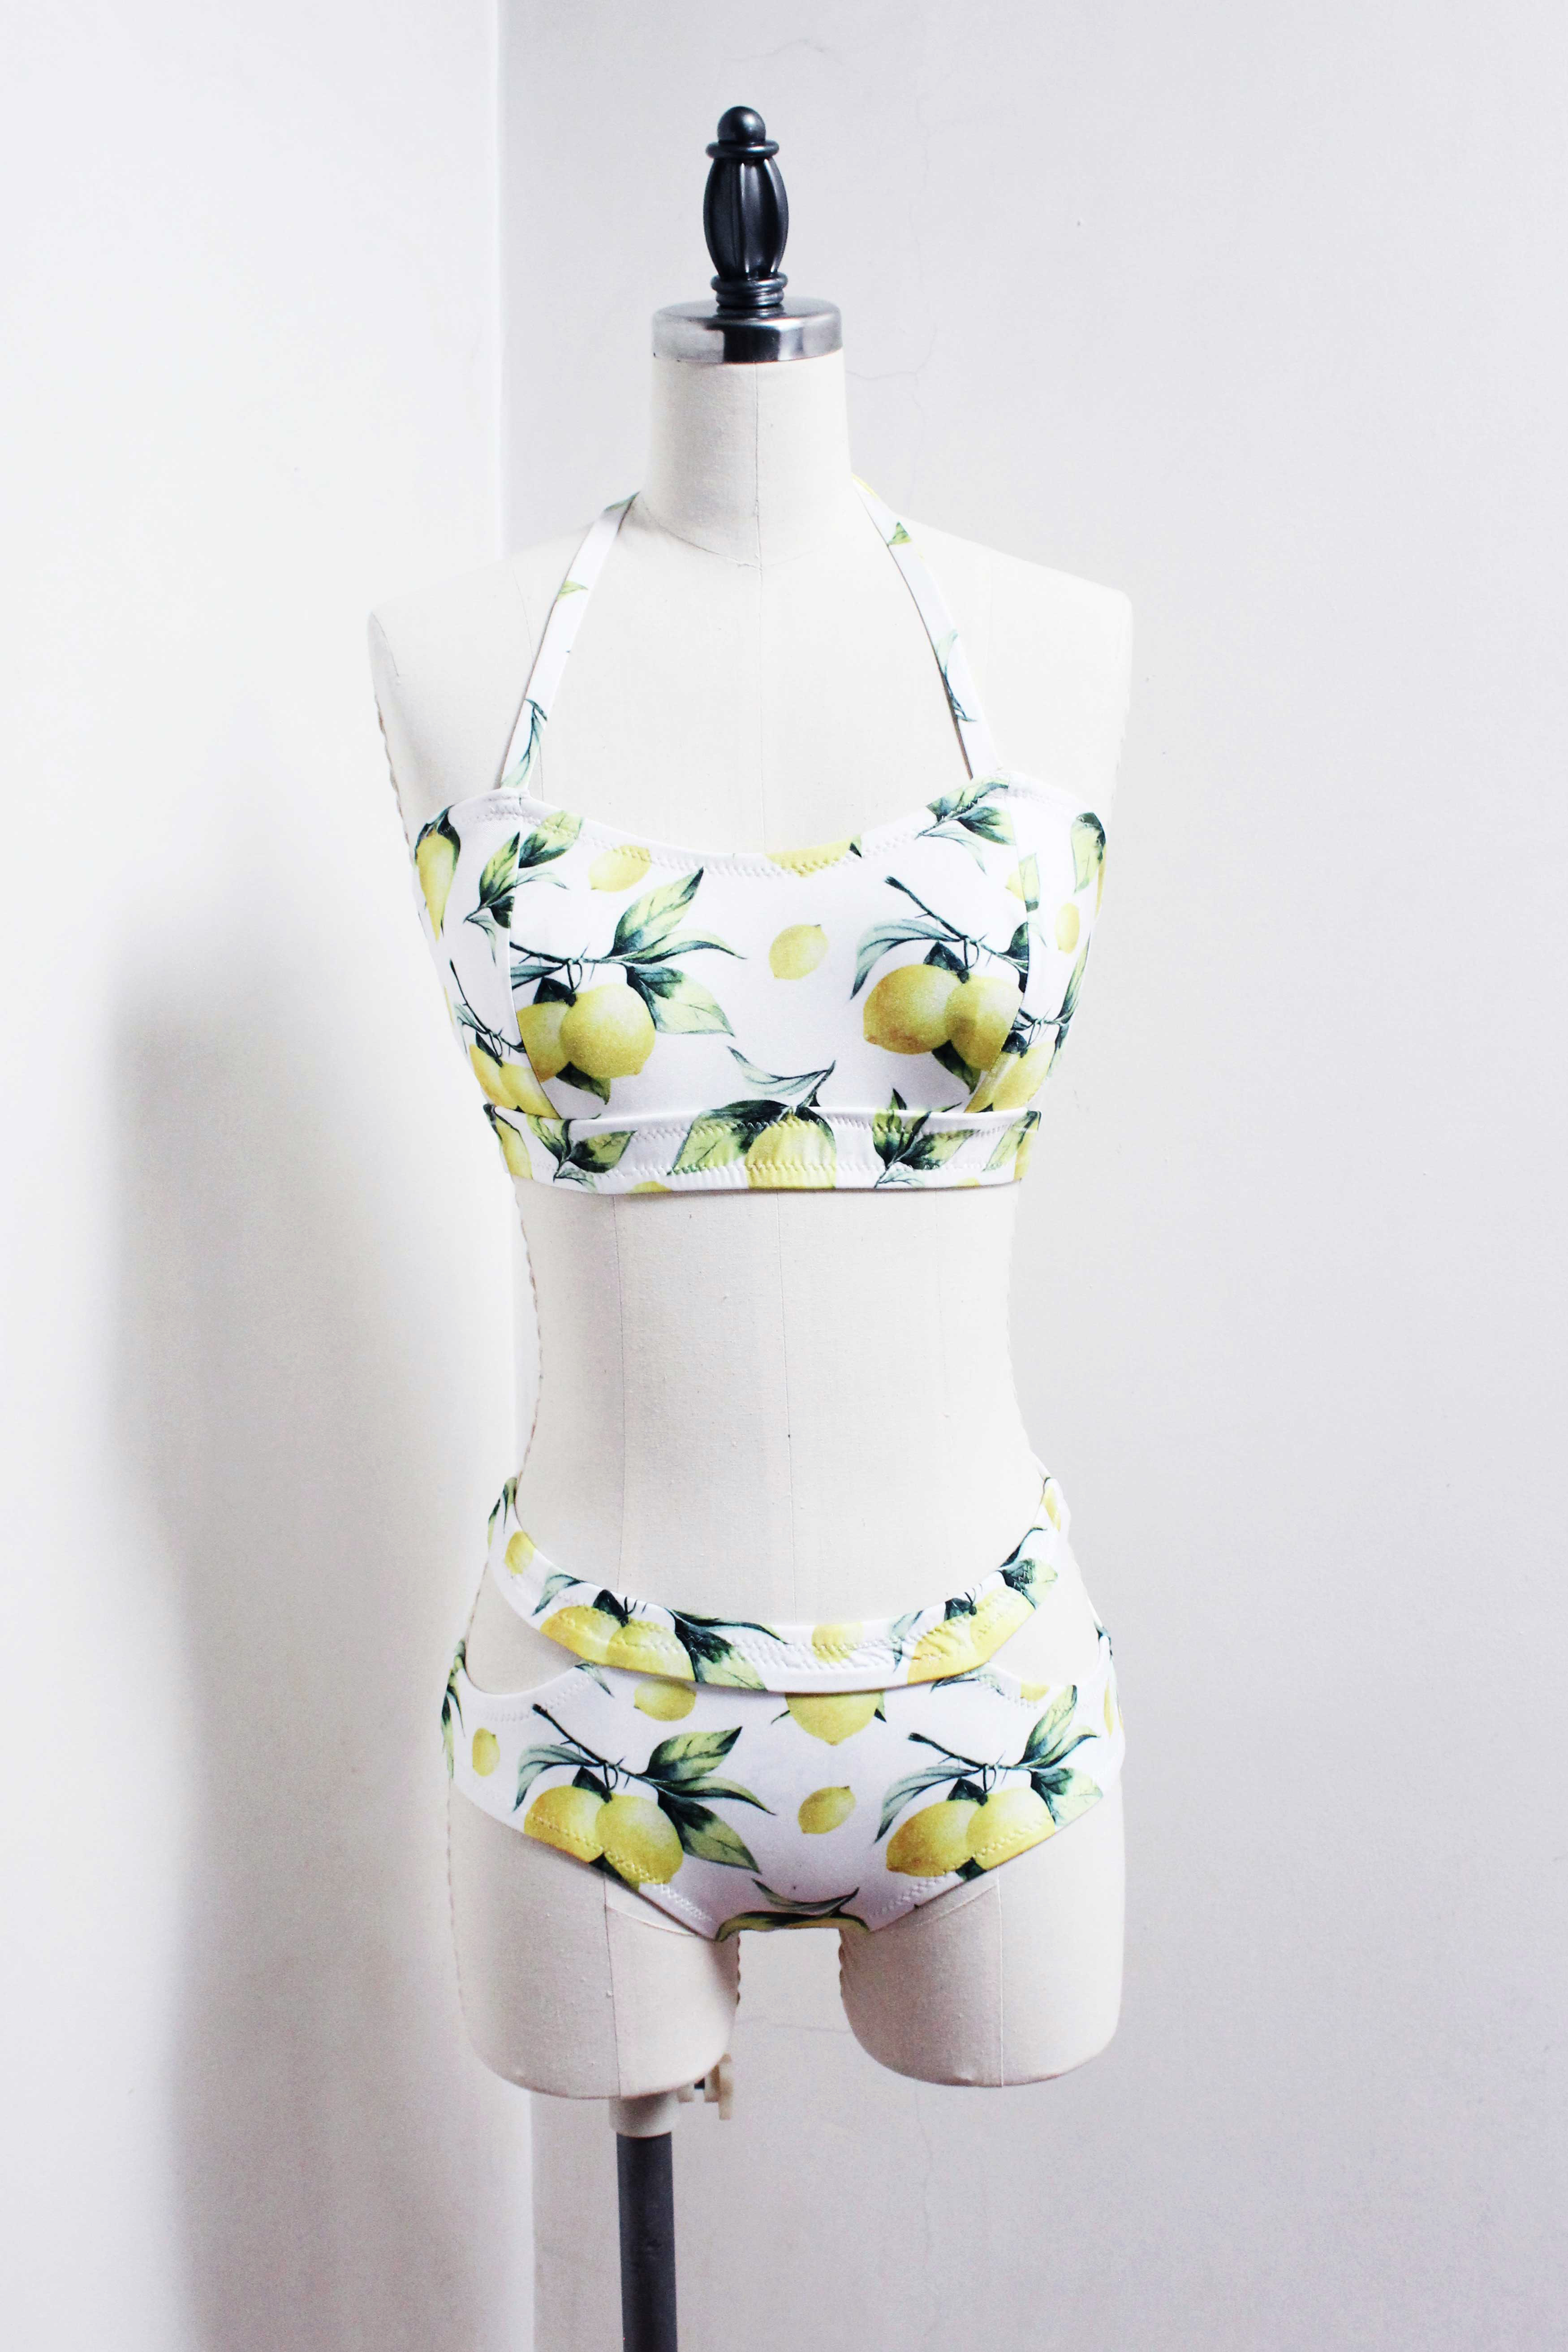 Evie la Luve Mimi Bikini Top and Bottom Swimwear Pattern Sew Your Own Swimwear